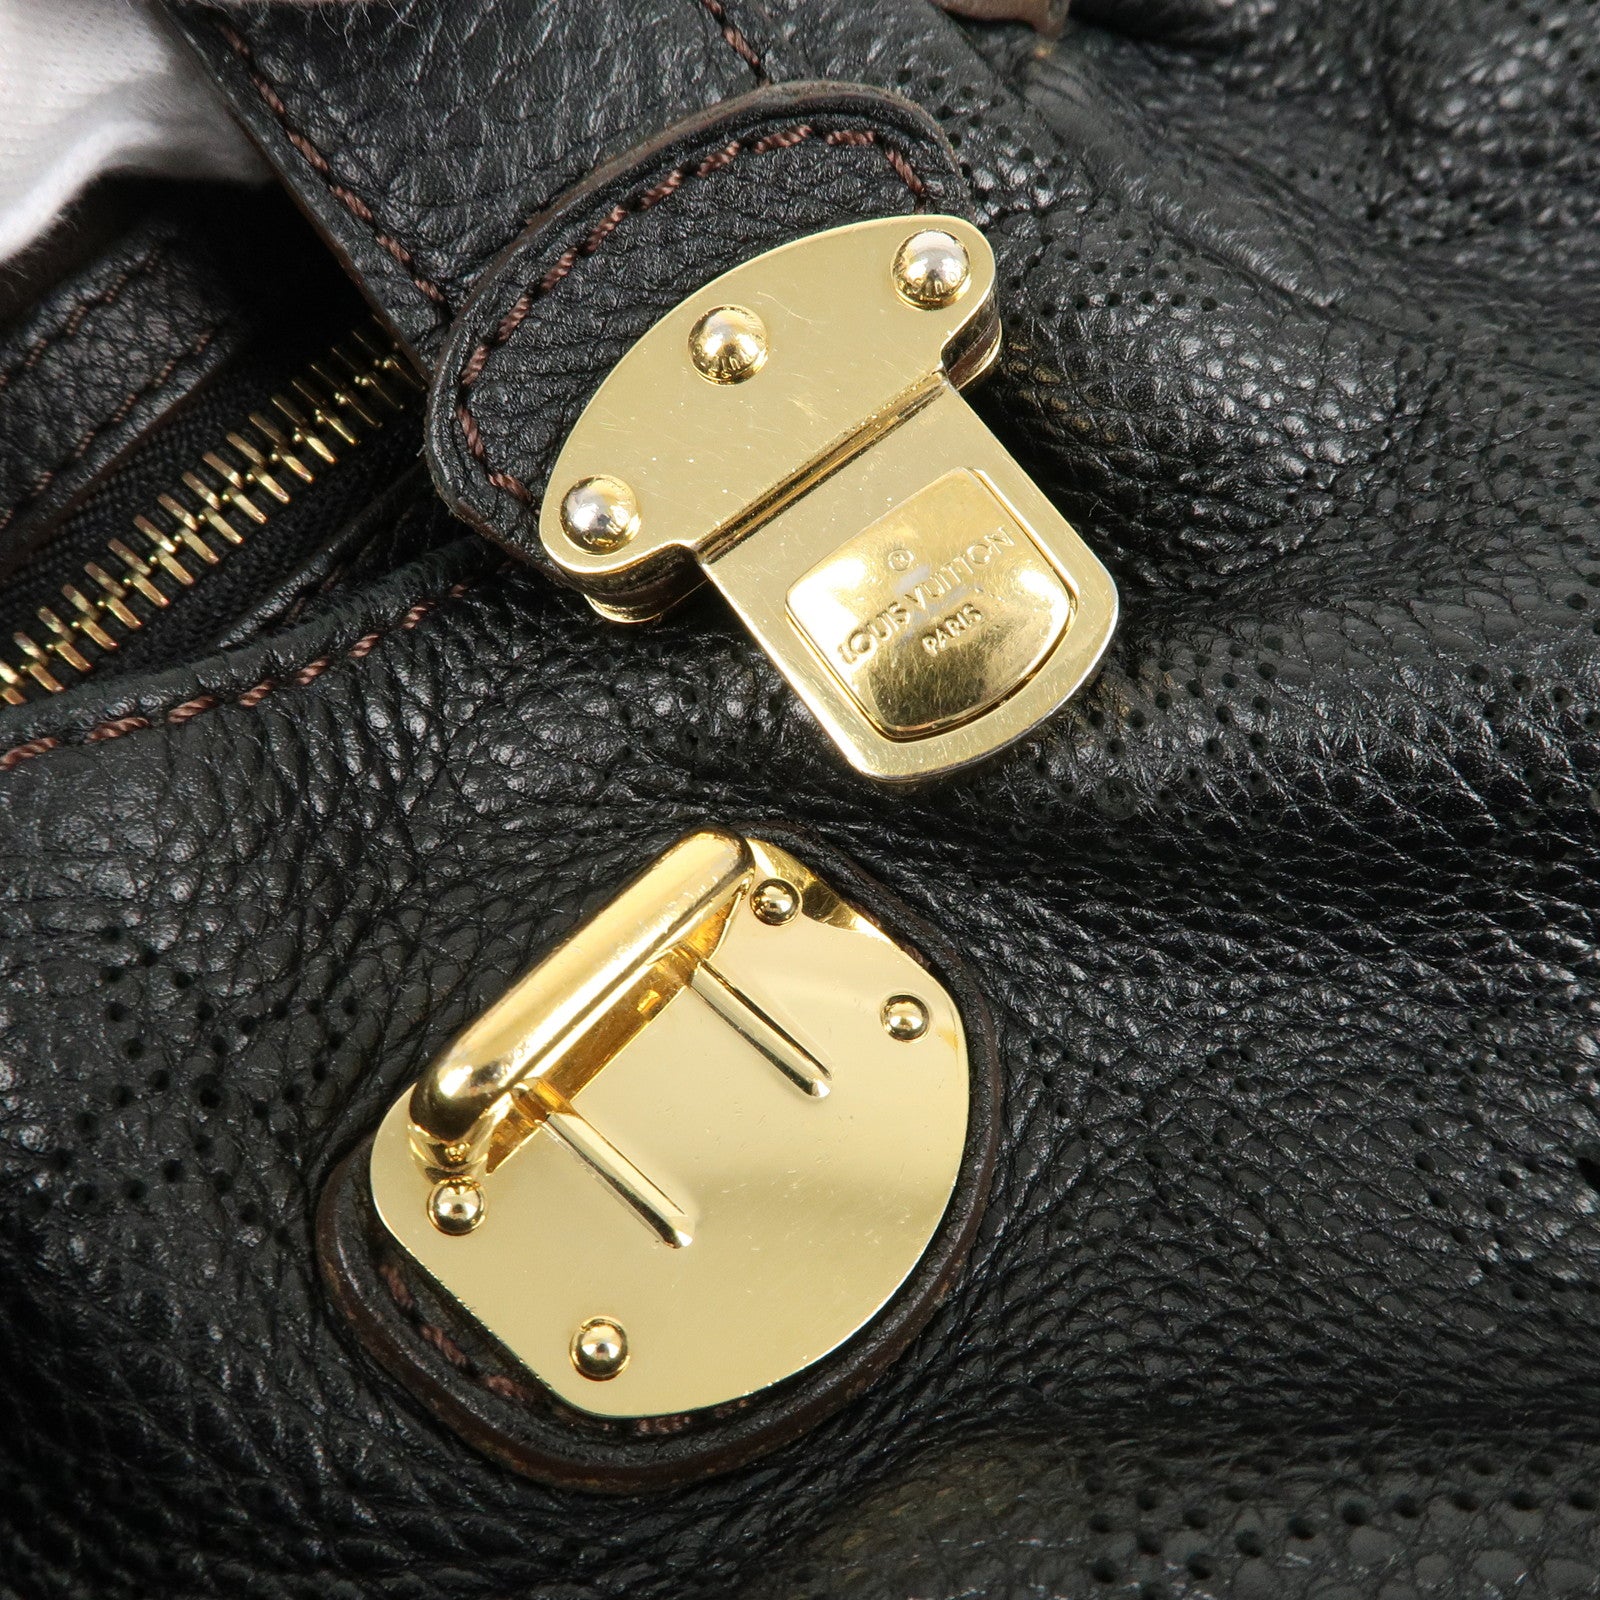 Louis Vuitton's handbag, Mahina XL Hobo (Black Monogram Leather)